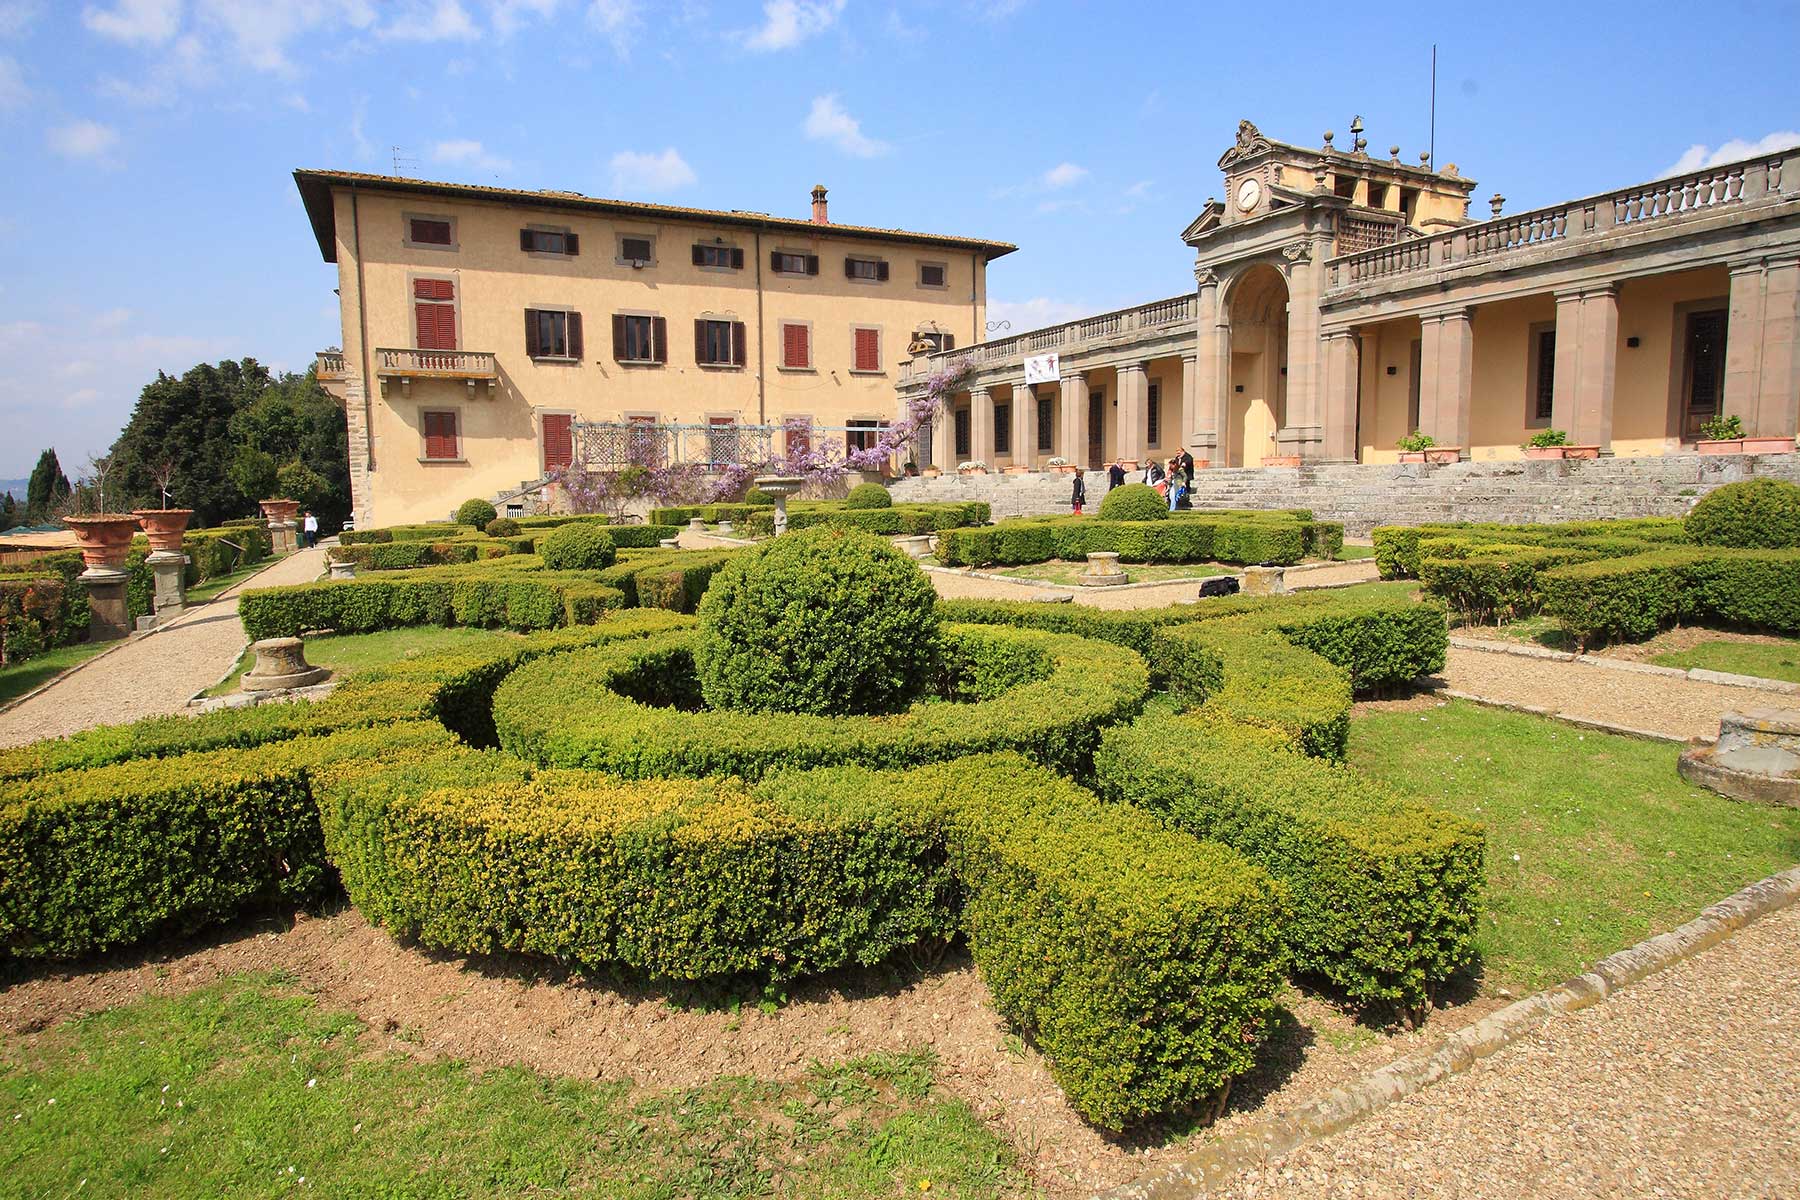 caruso Villa Medici villa (Image: Francesco de marco/Shutterstock)